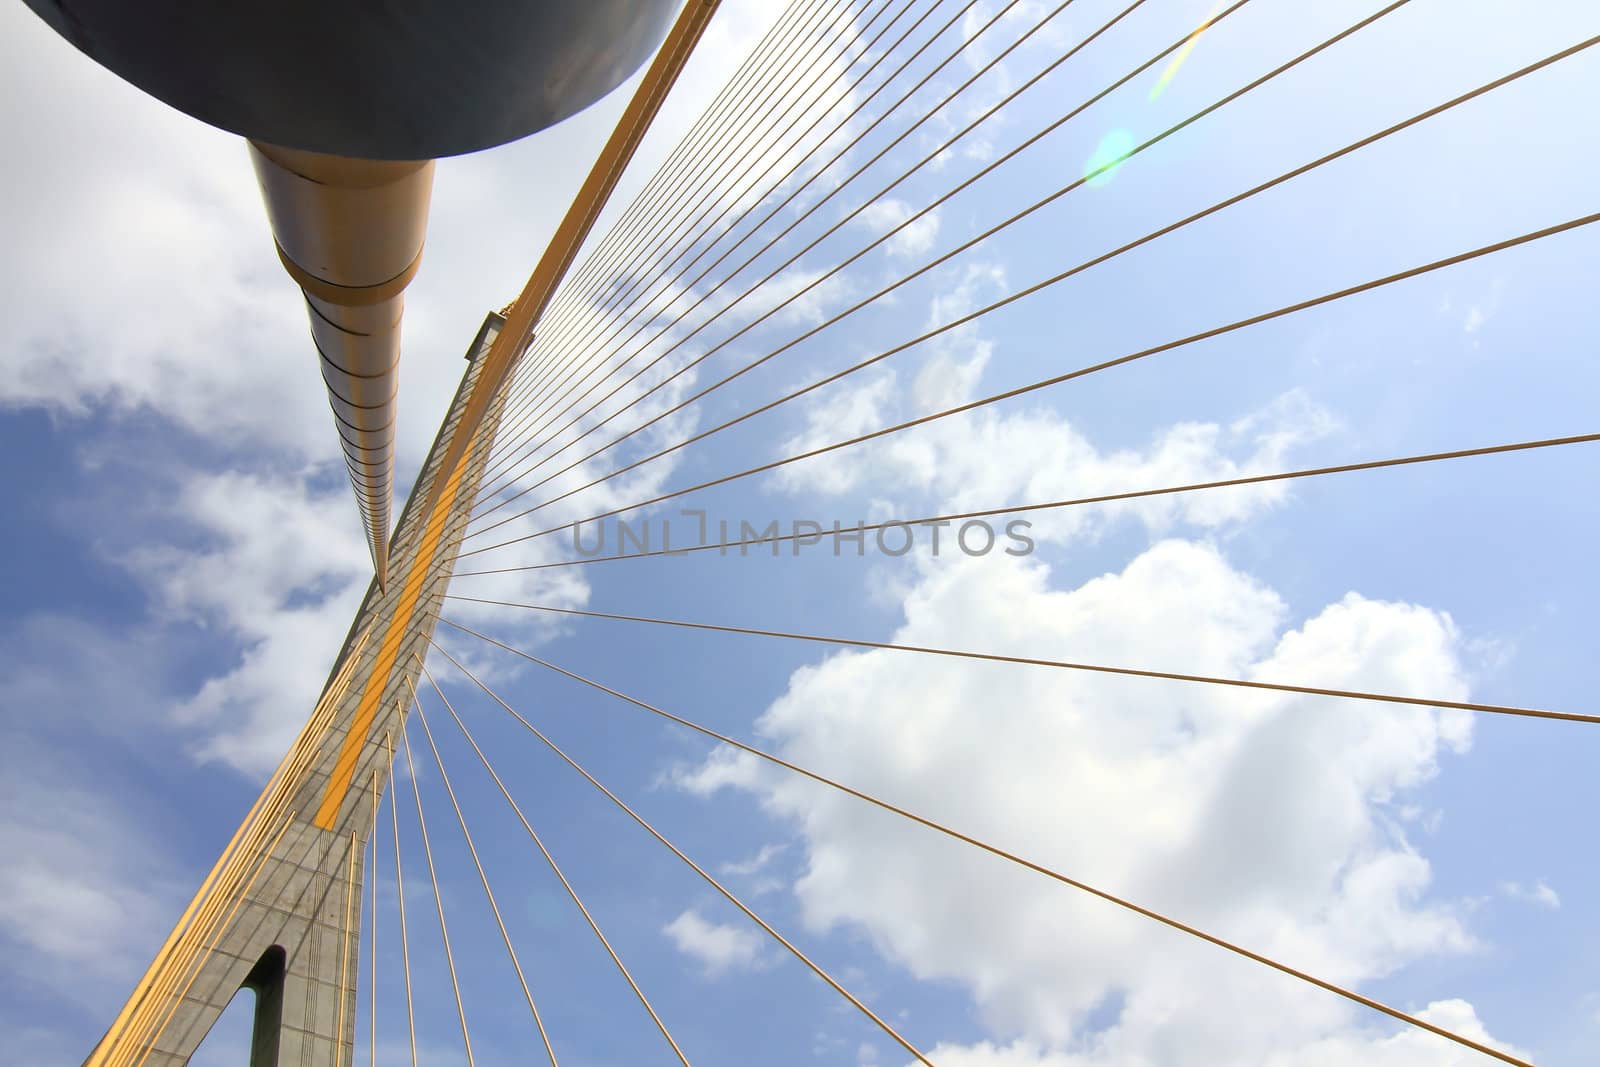 Mega sling Bridge,Rama 8, in bangkok Thailand